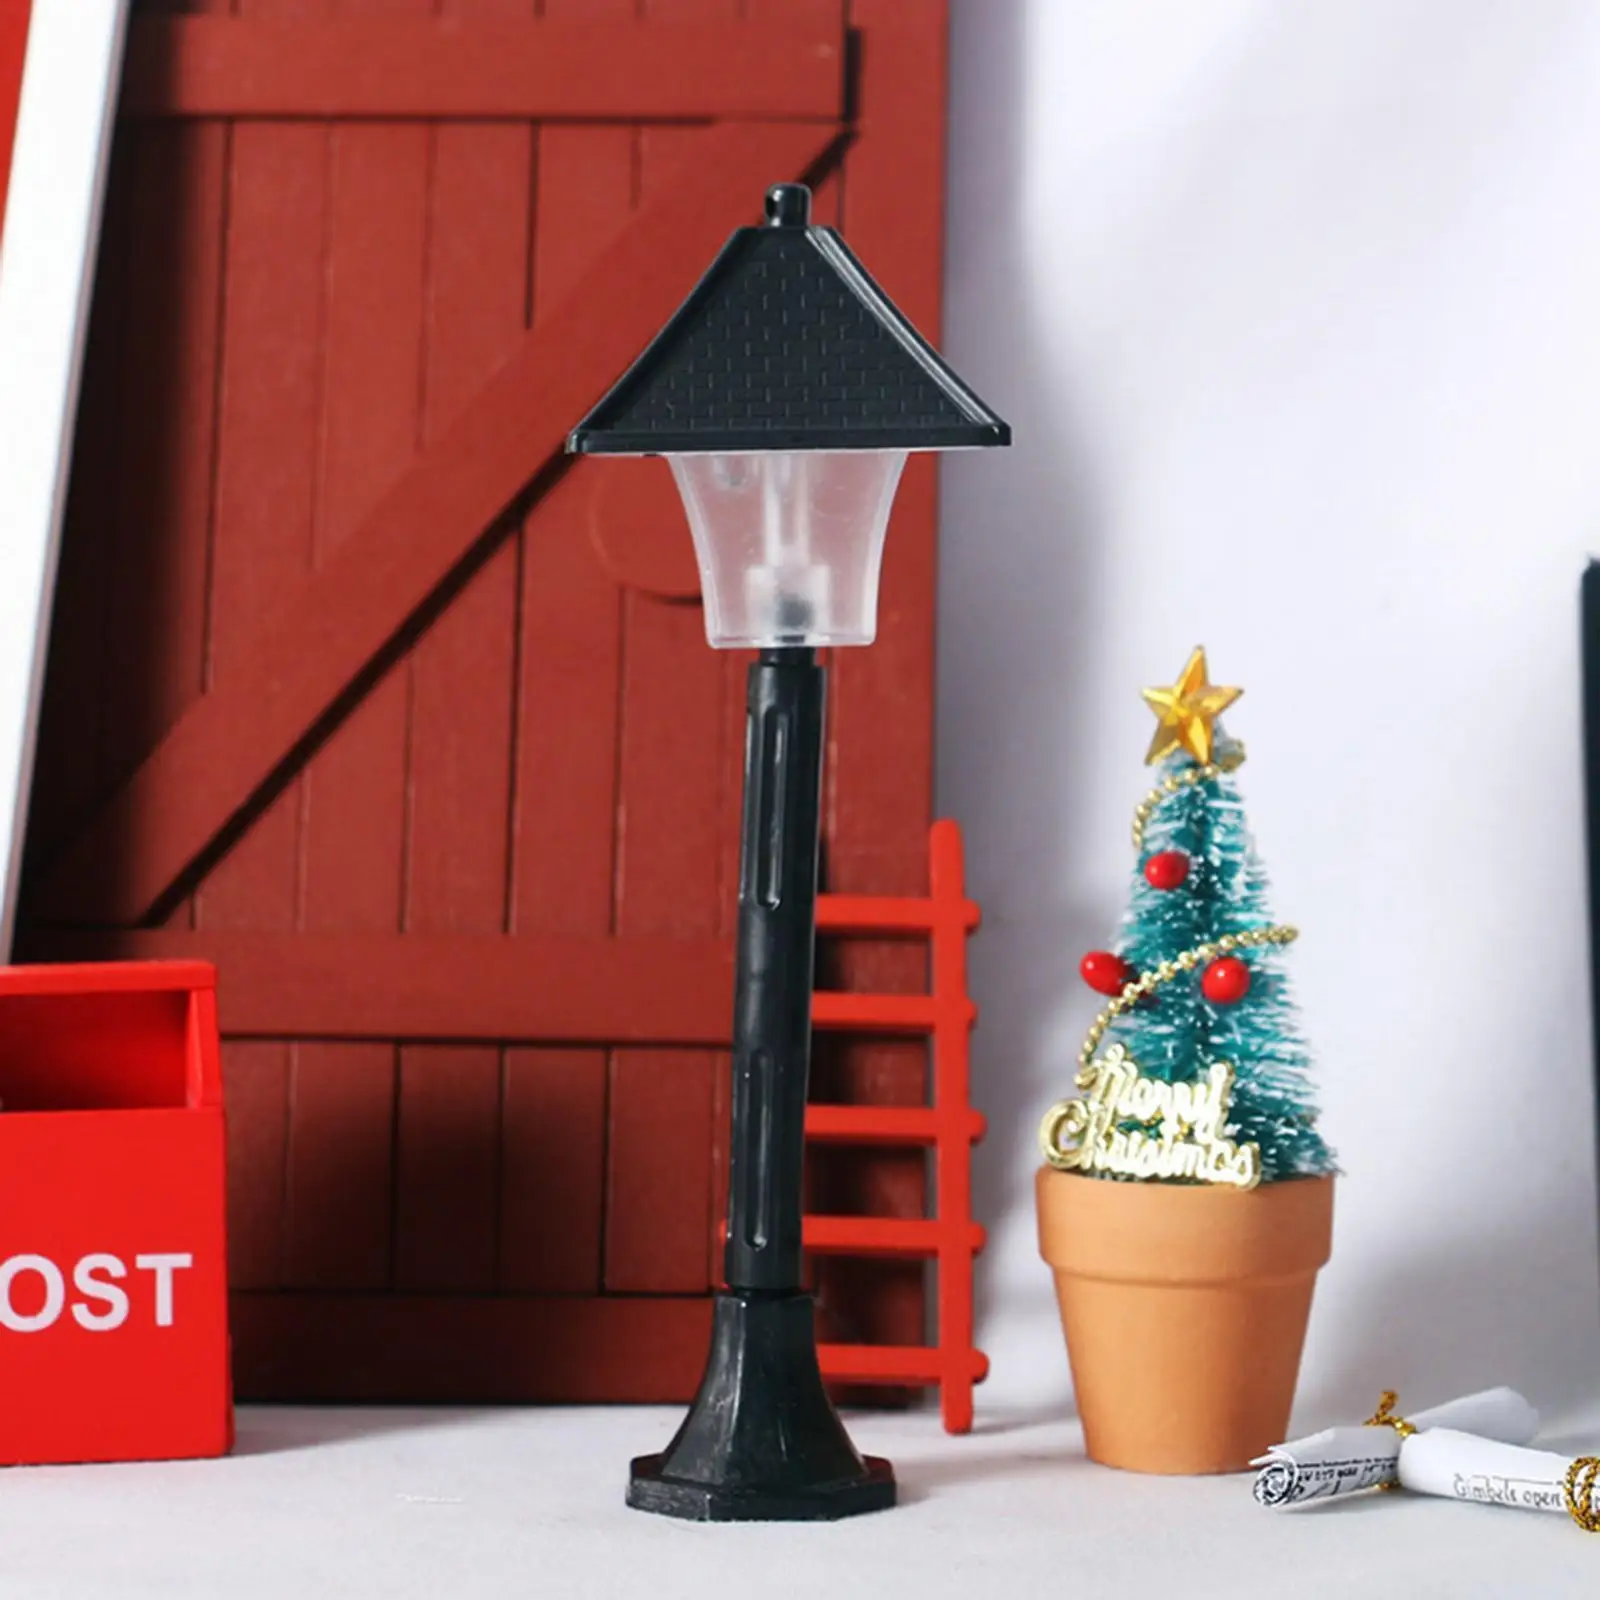 2Pcs Dollhouse Miniature Lamp Post Ornament Furniture Model for Accessories